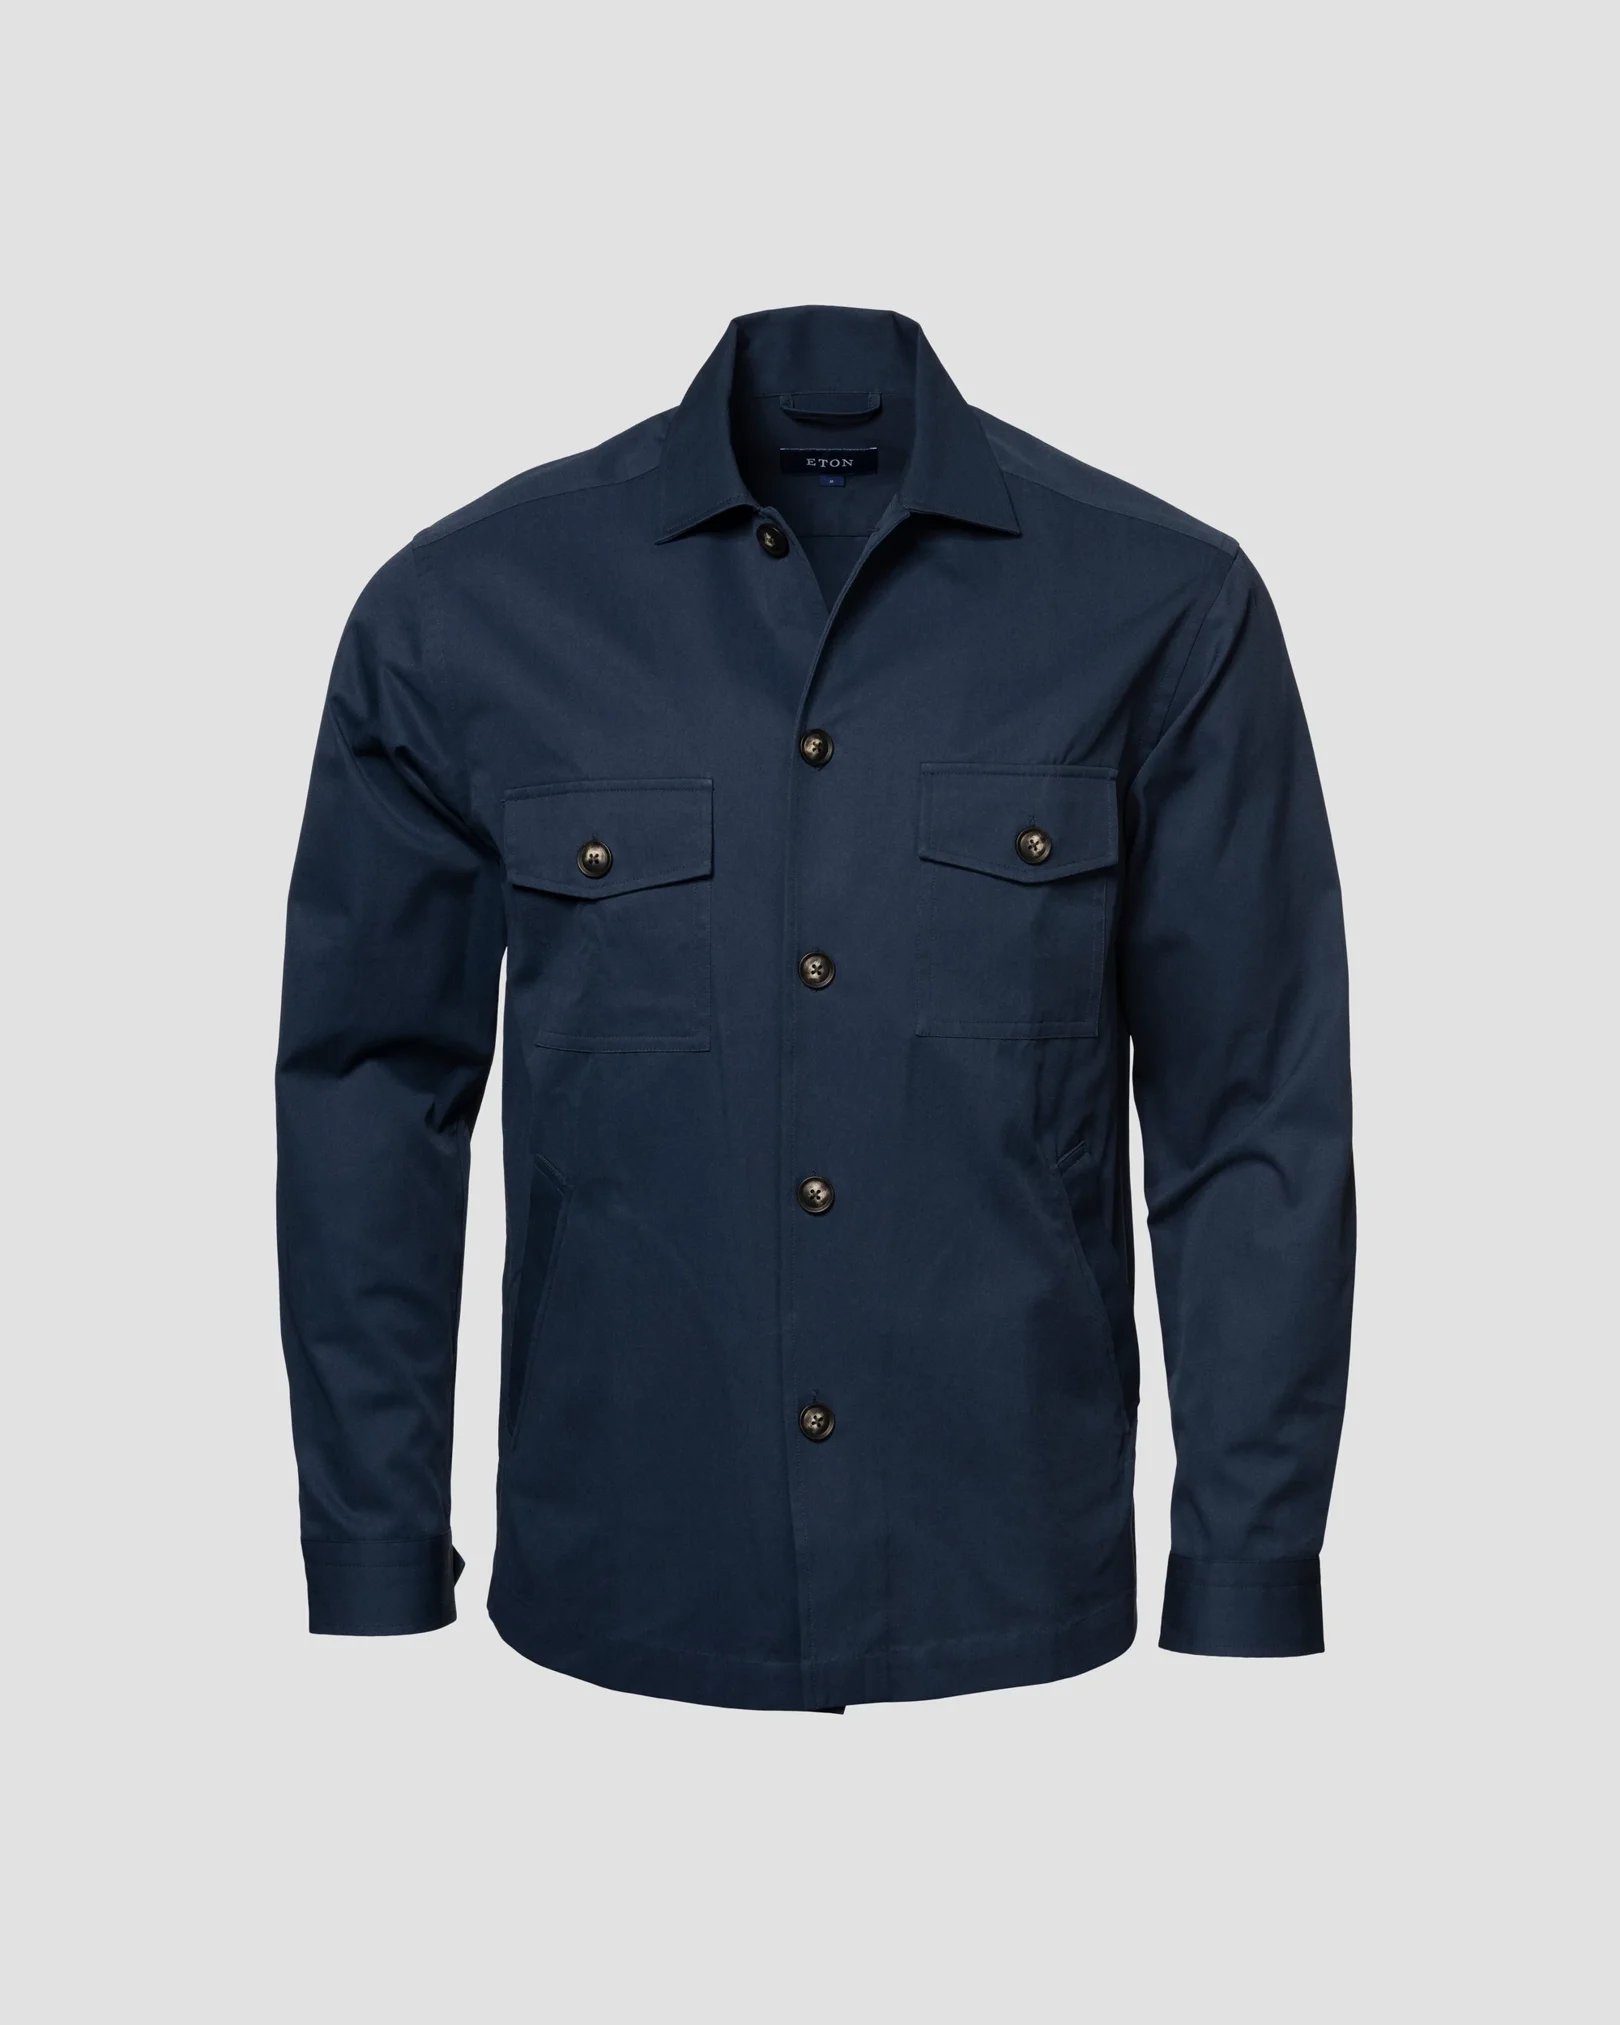 Navyblaue Hemdjacke aus schwerem Twill